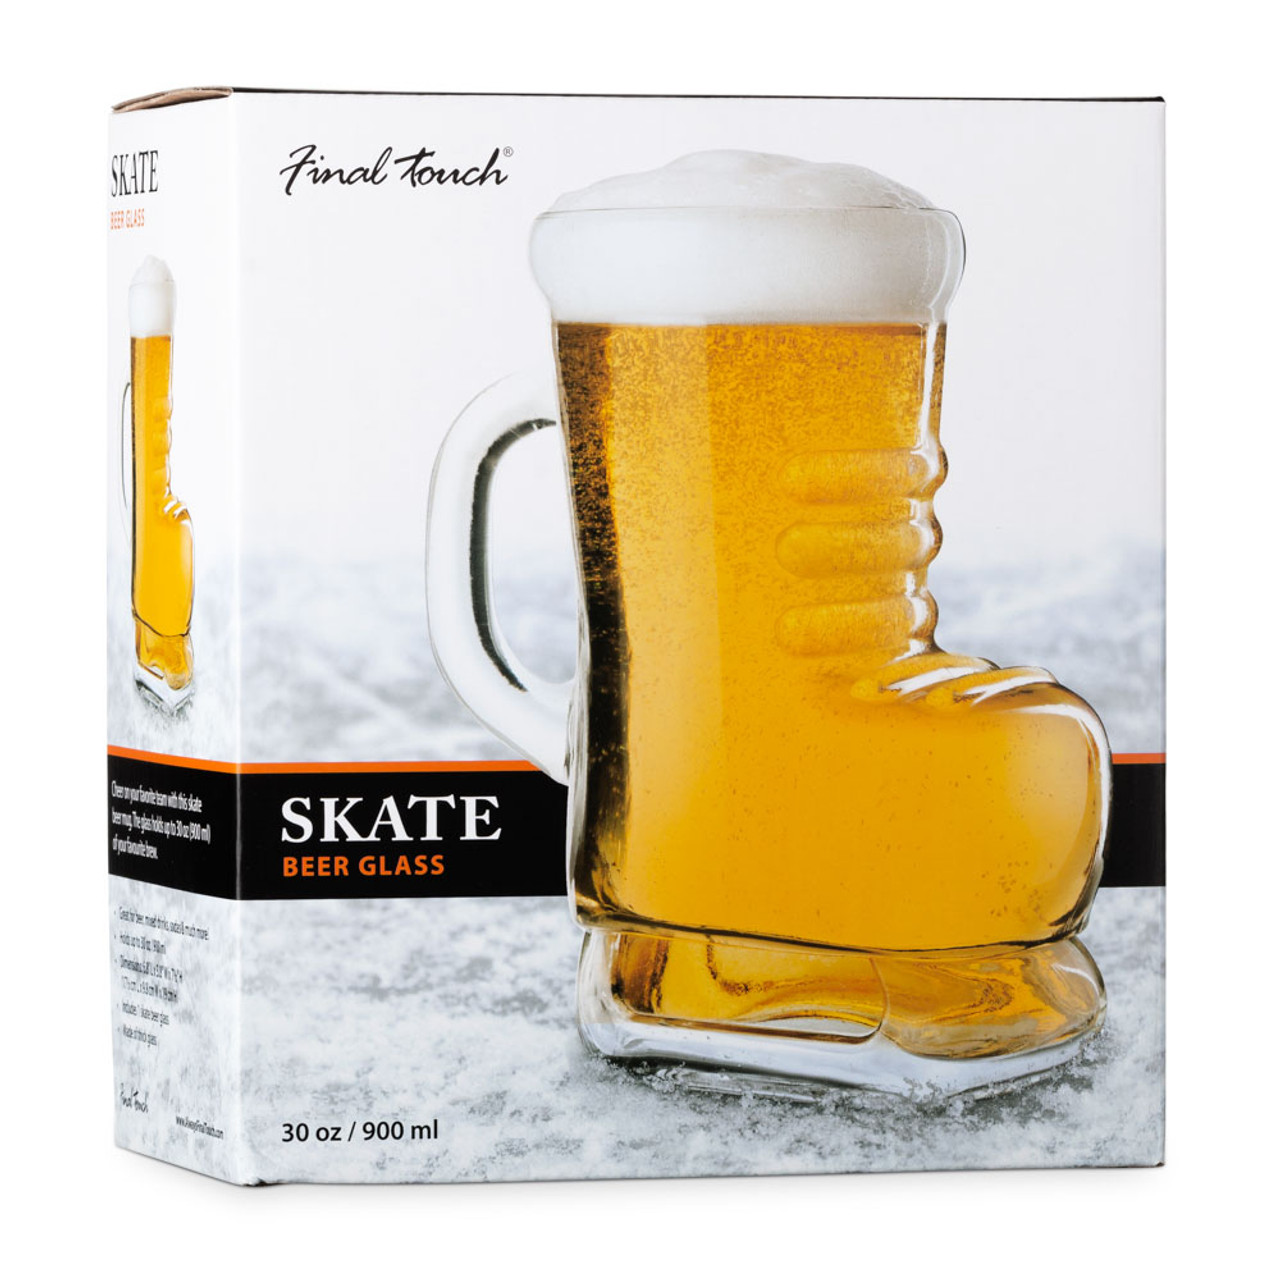 https://cdn11.bigcommerce.com/s-cznxq08r7/images/stencil/1280x1280/products/5001/14020/GG5023-Ice-Skate-Beer-Boot-Mug-30-oz-01__96210.1632838995.jpg?c=1